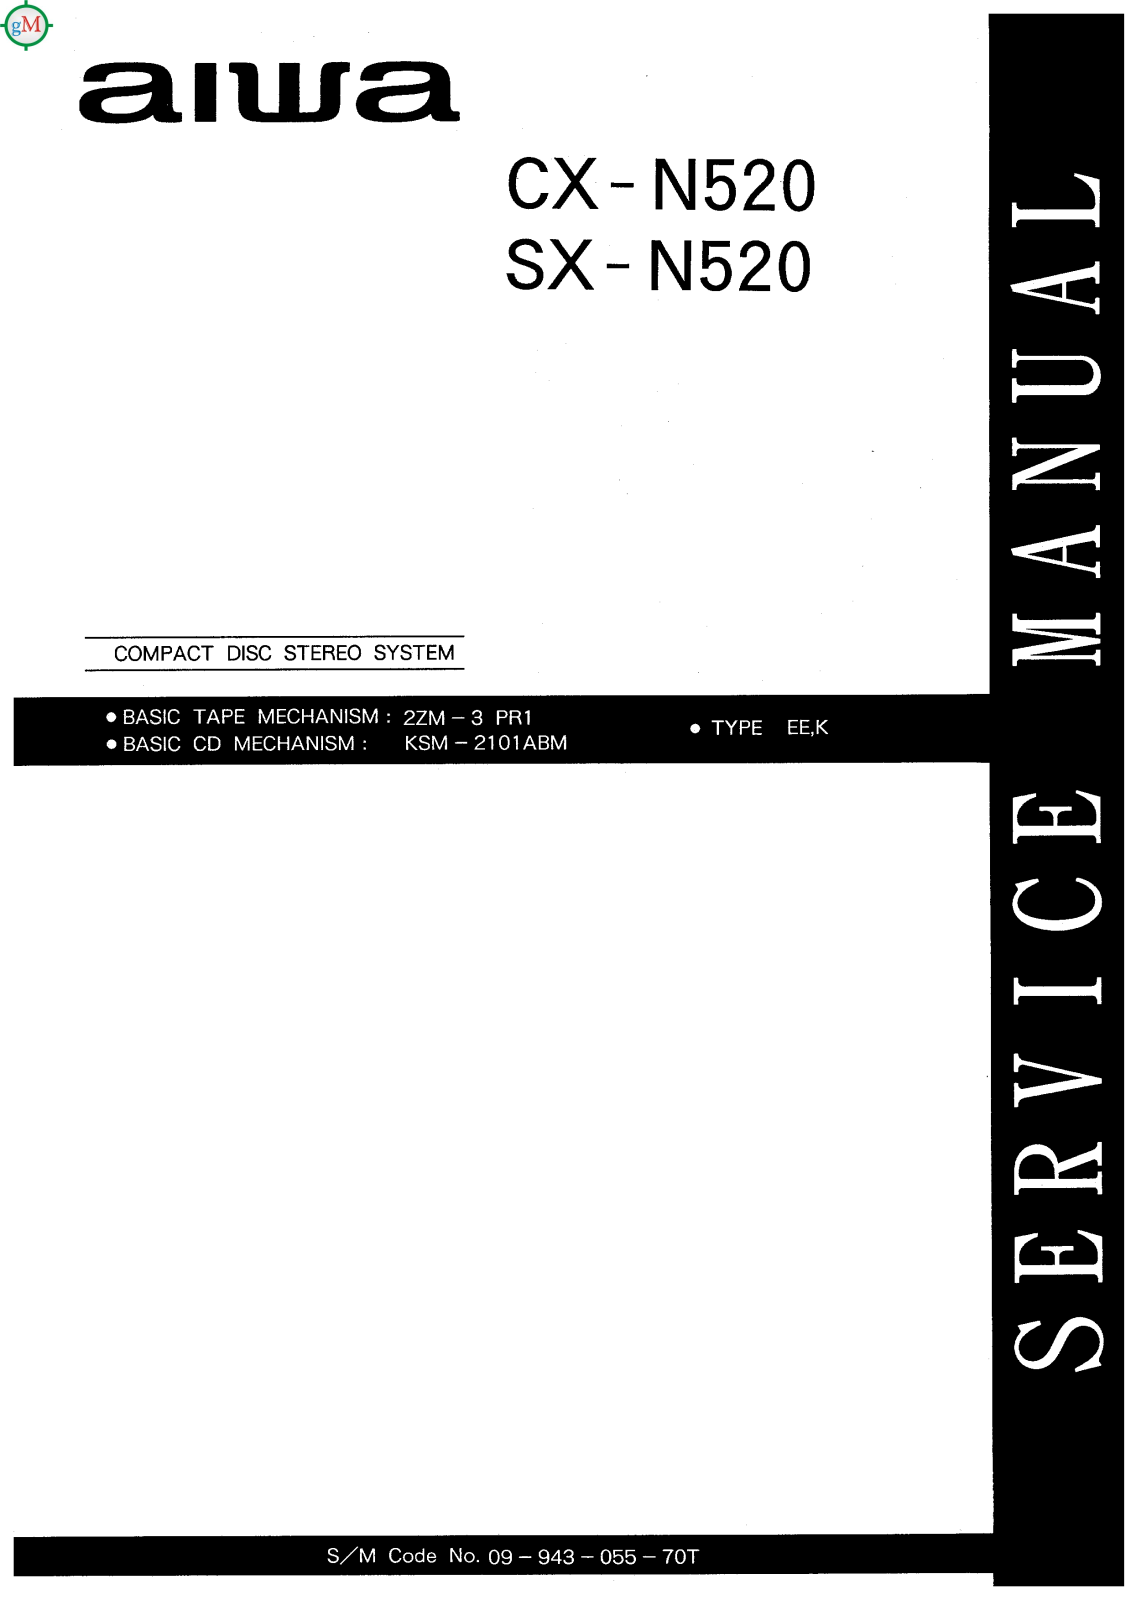 Aiwa CX-N520, SX-N520 Service Manual